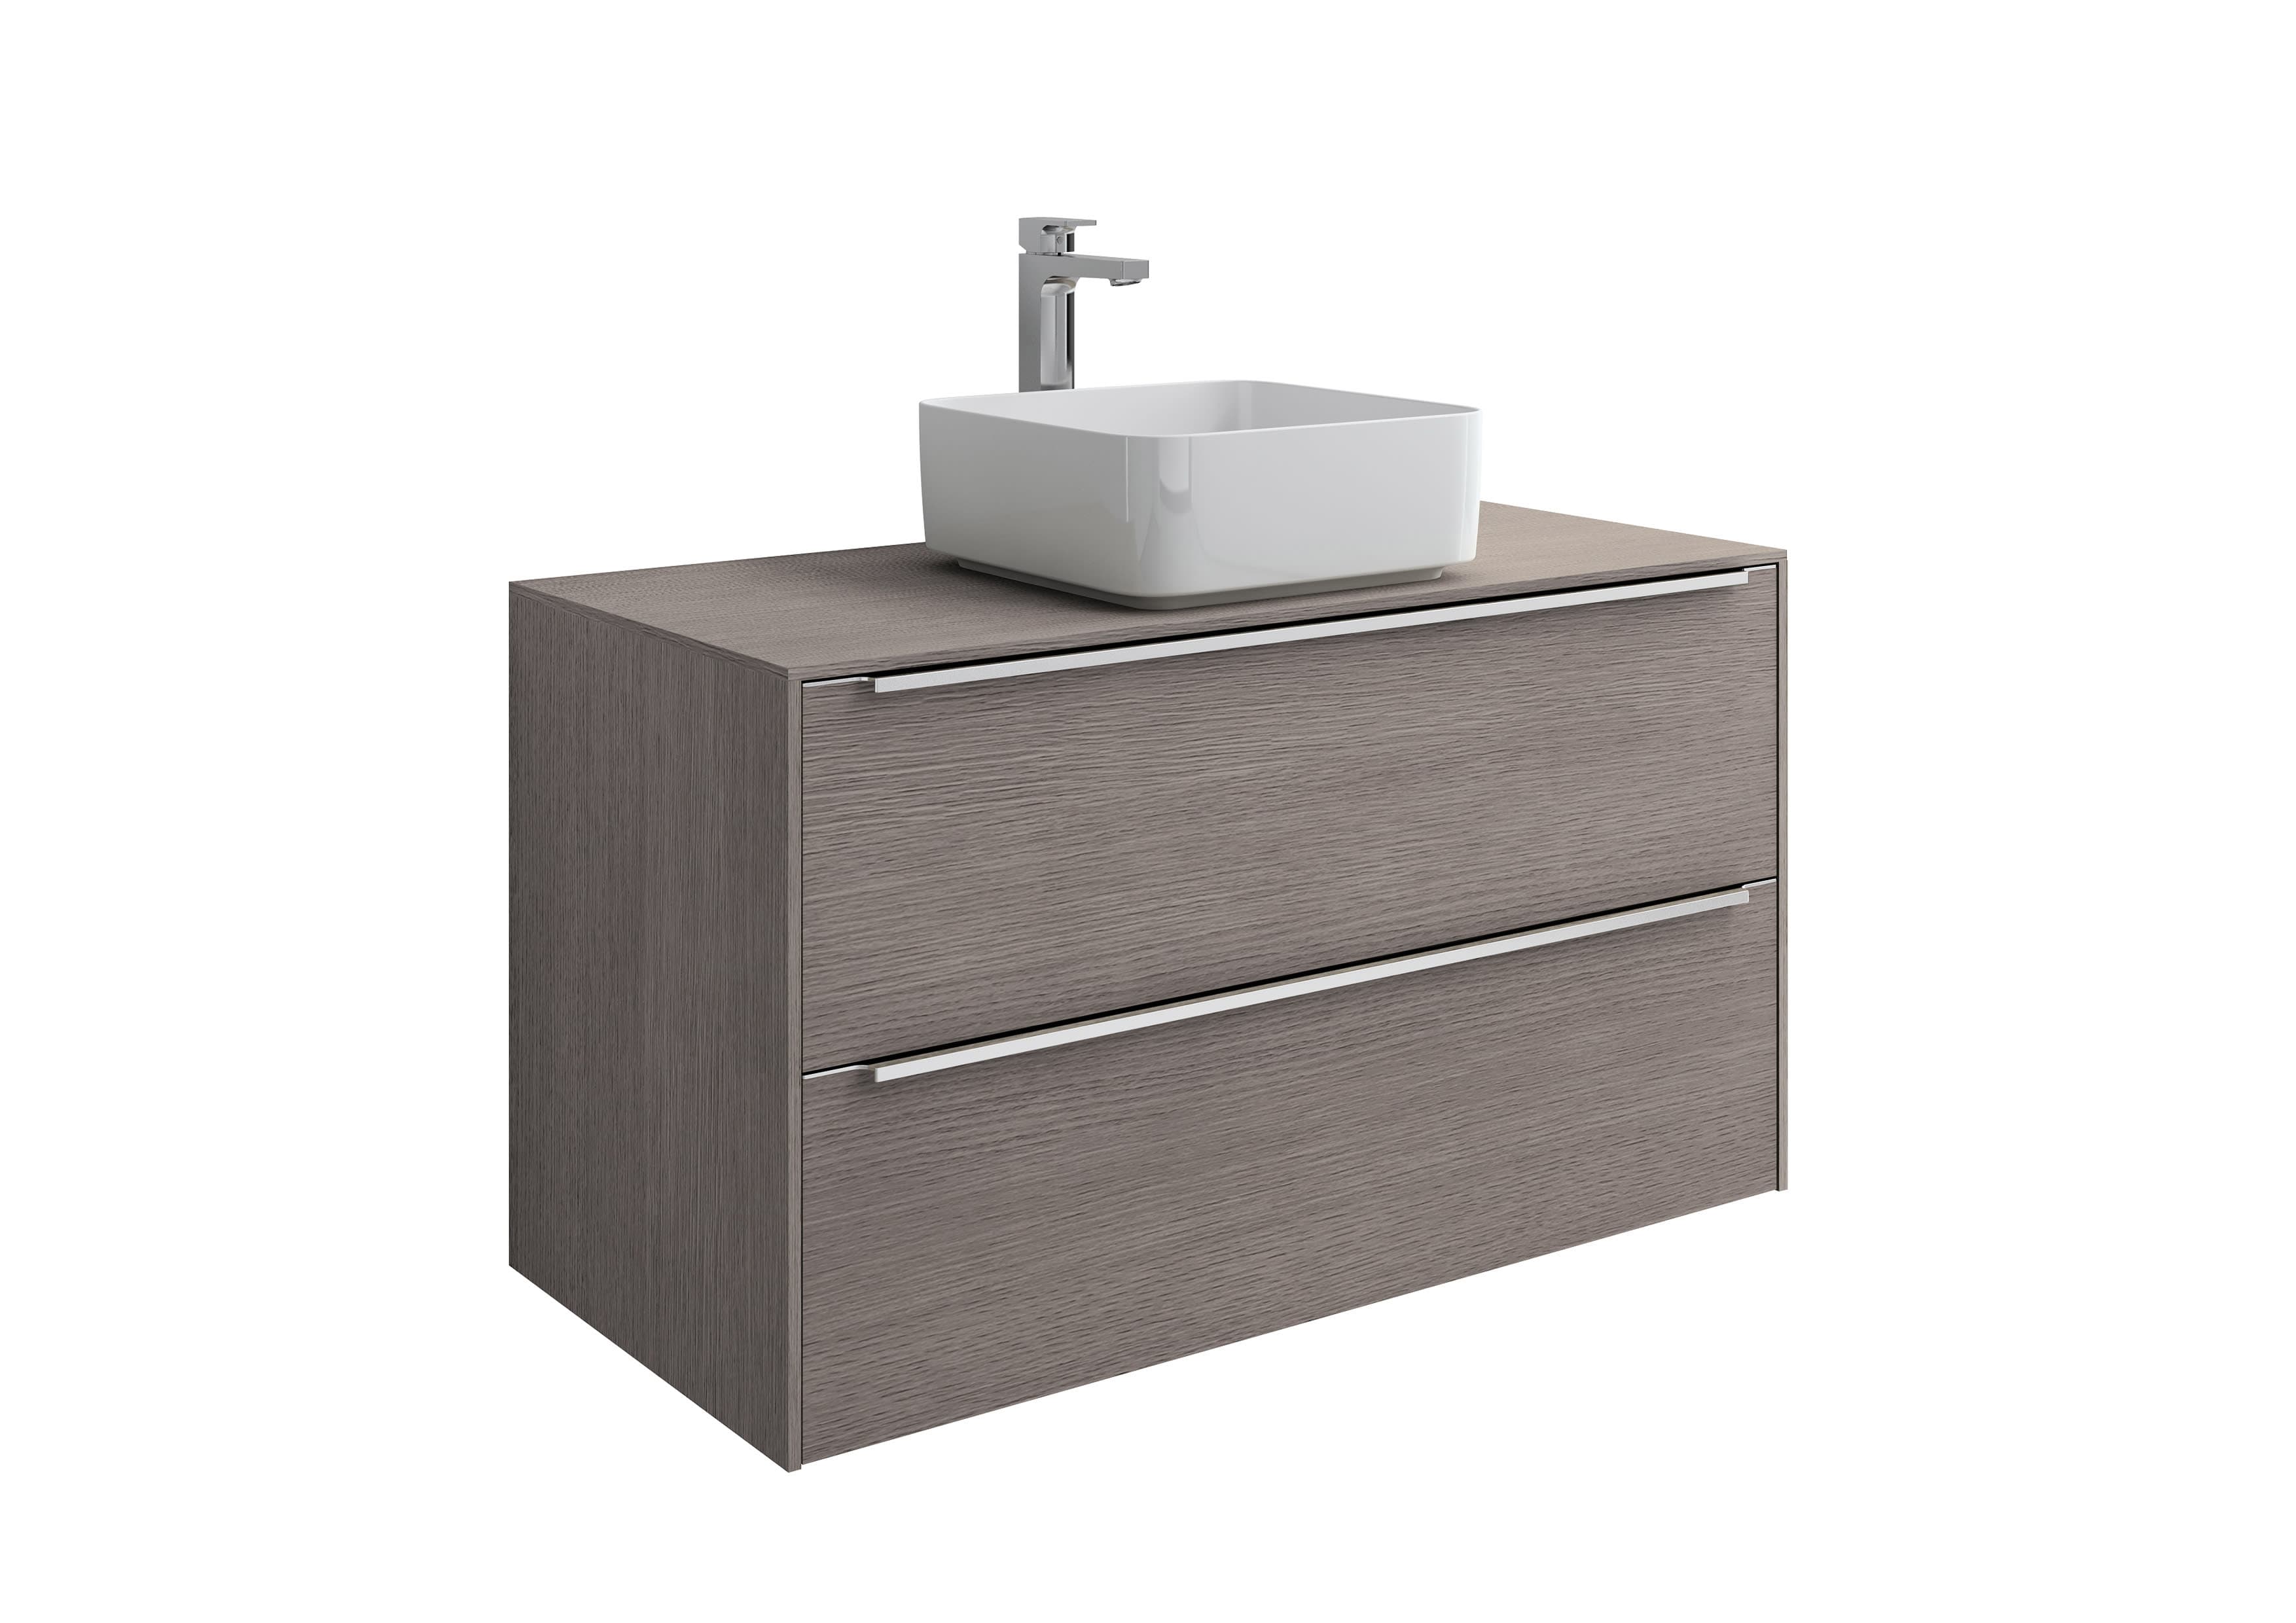 Sanitaire Meubles Salle de bain INSPIRA A851081402 Meuble 2 tiroirs avec plan pour vasque à poser Roca 4 - Mirage ceramica